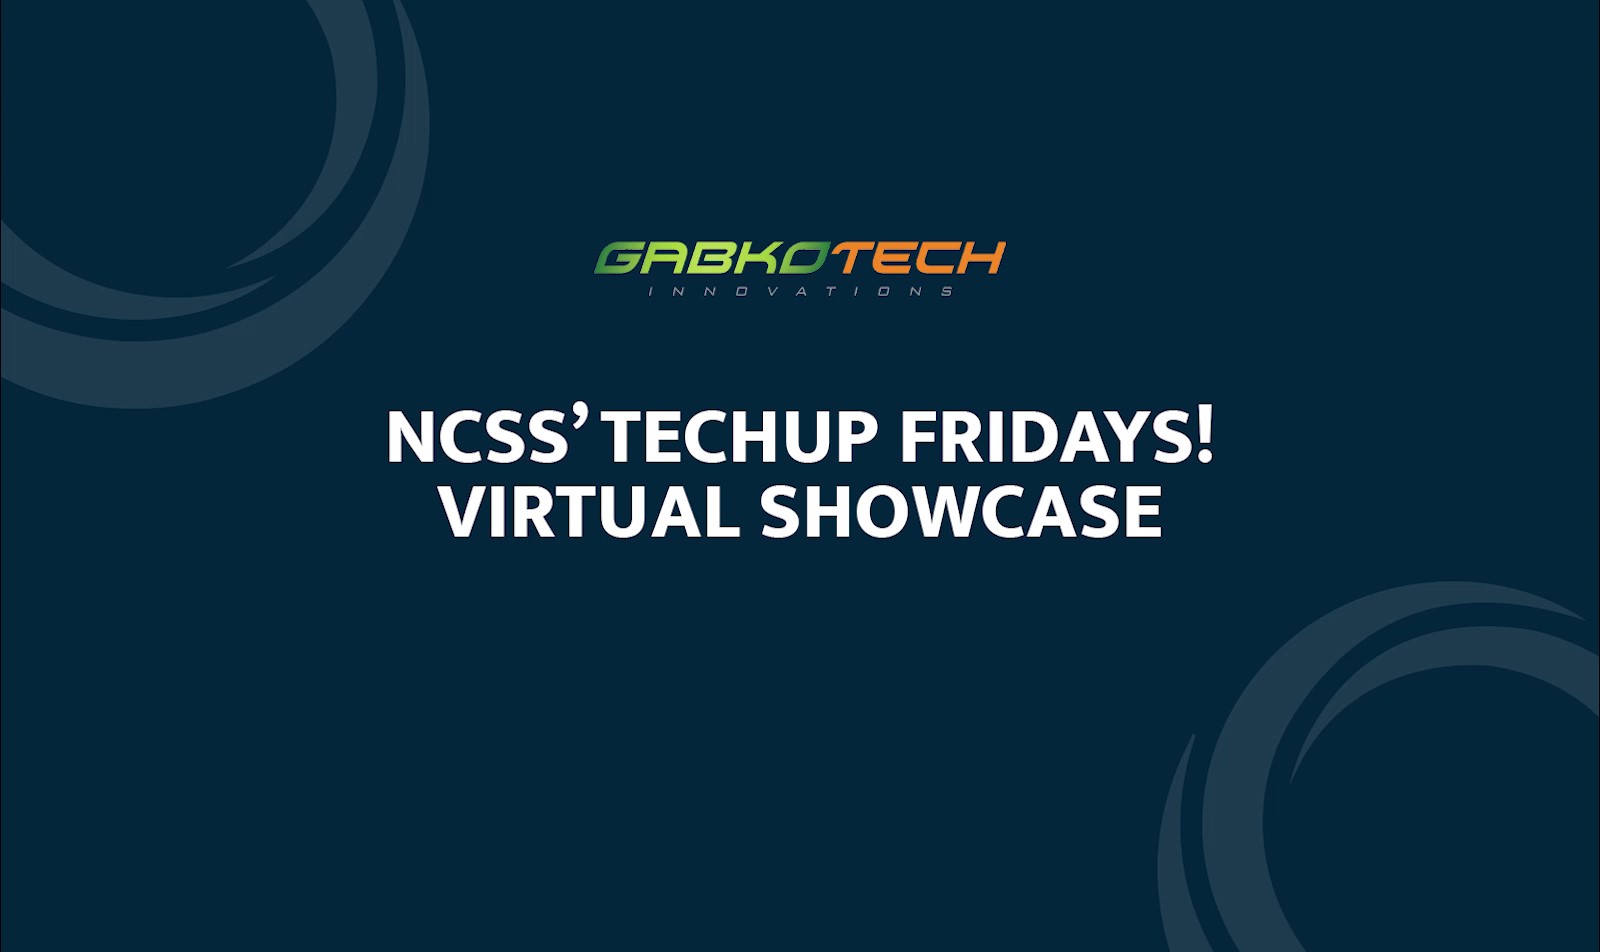 NCSS Techup fridays - Virtual showcase